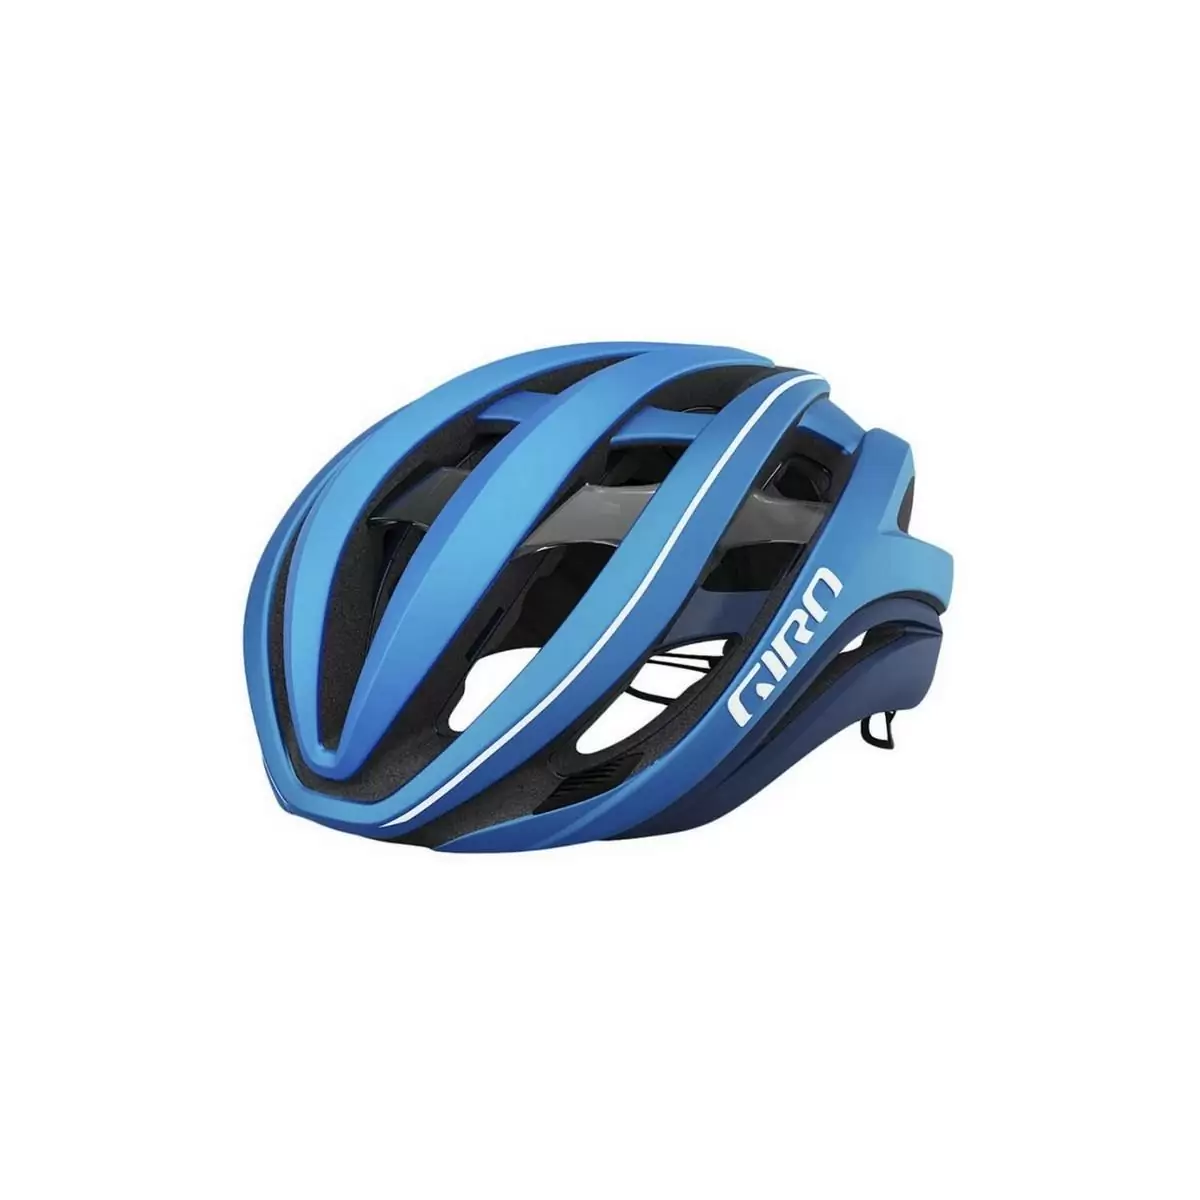 Helmet Aether Spherical MIPS Blue Size L (59-63cm) - image